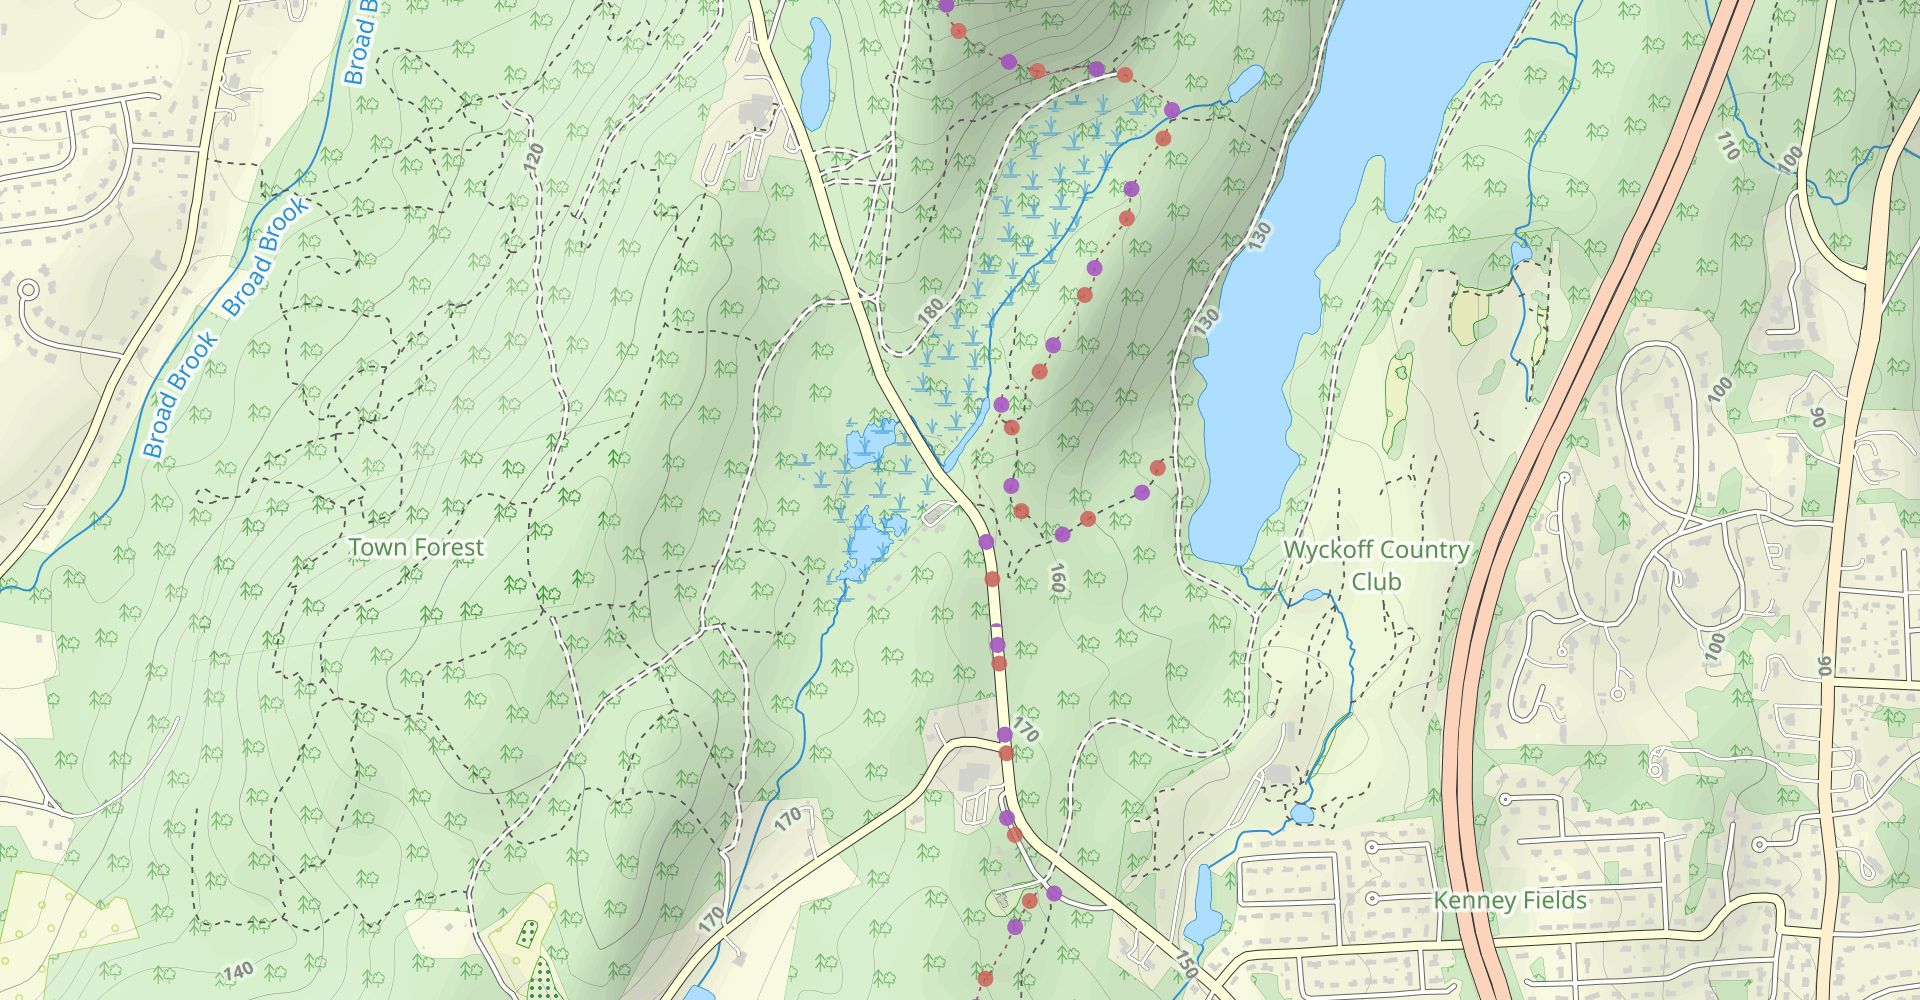 Mount Tom via Metacomet-Monadnock Trail (Short Option)